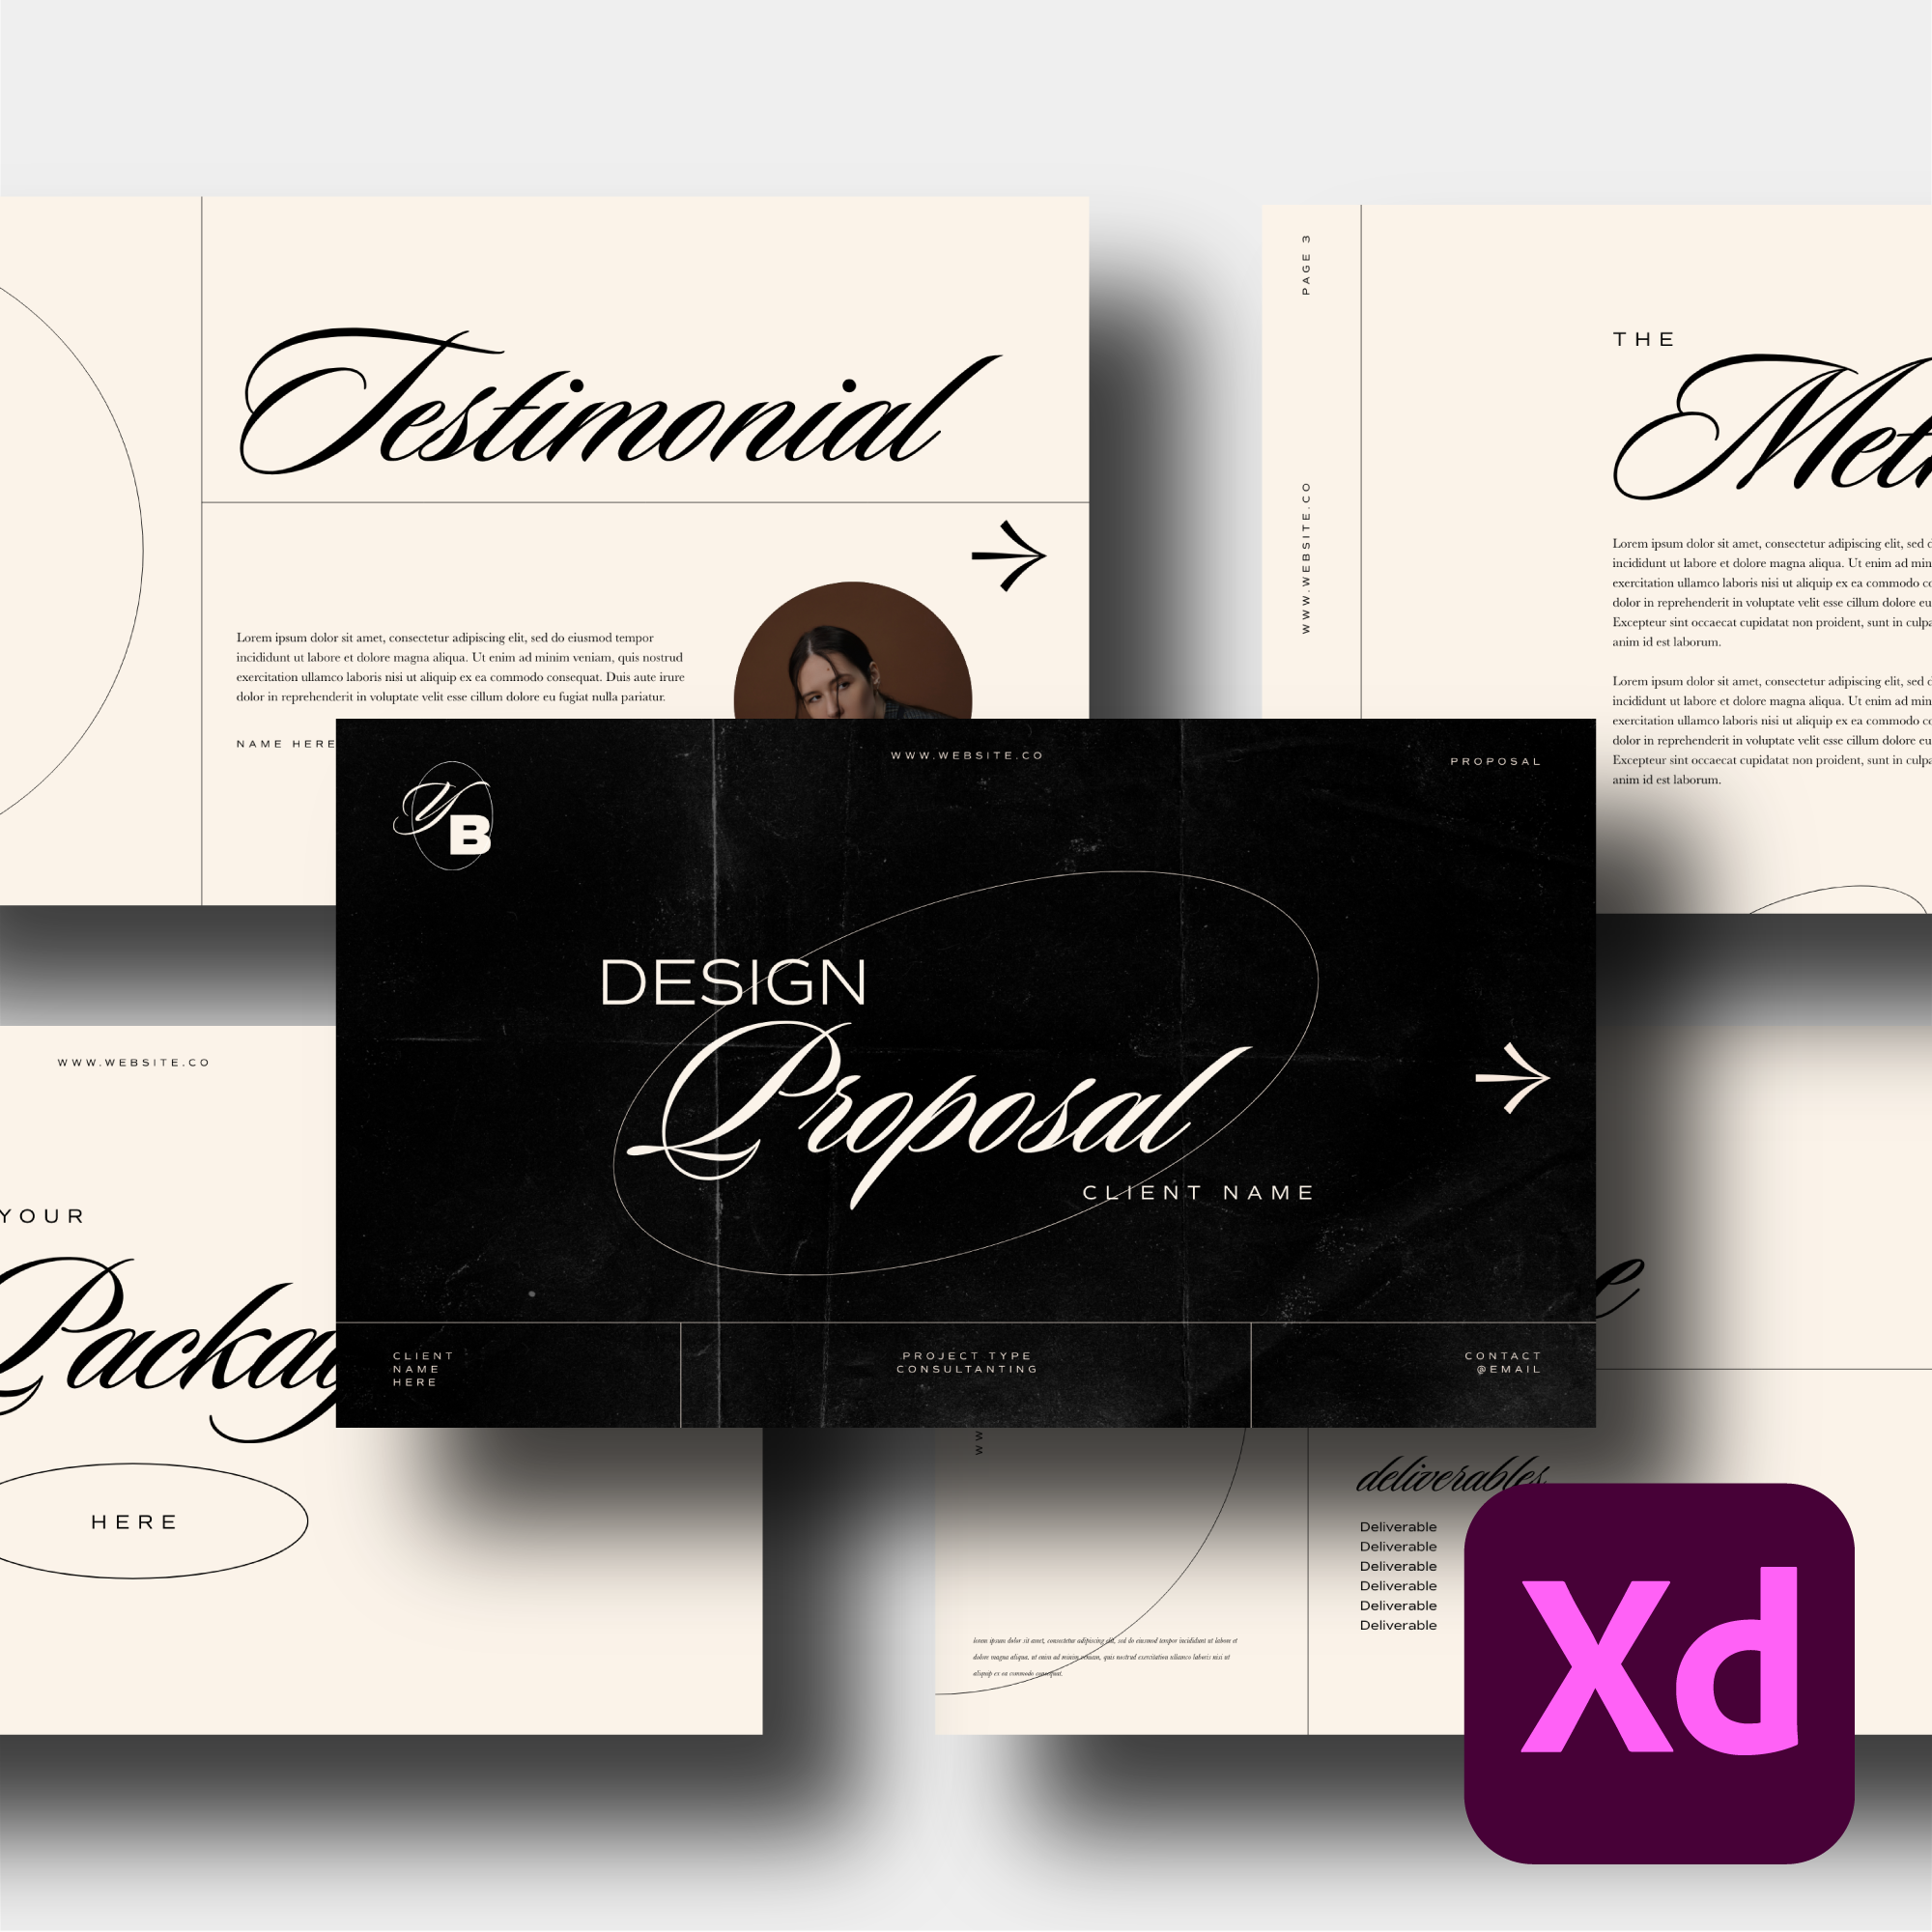 Adobe XD Design Proposal Template